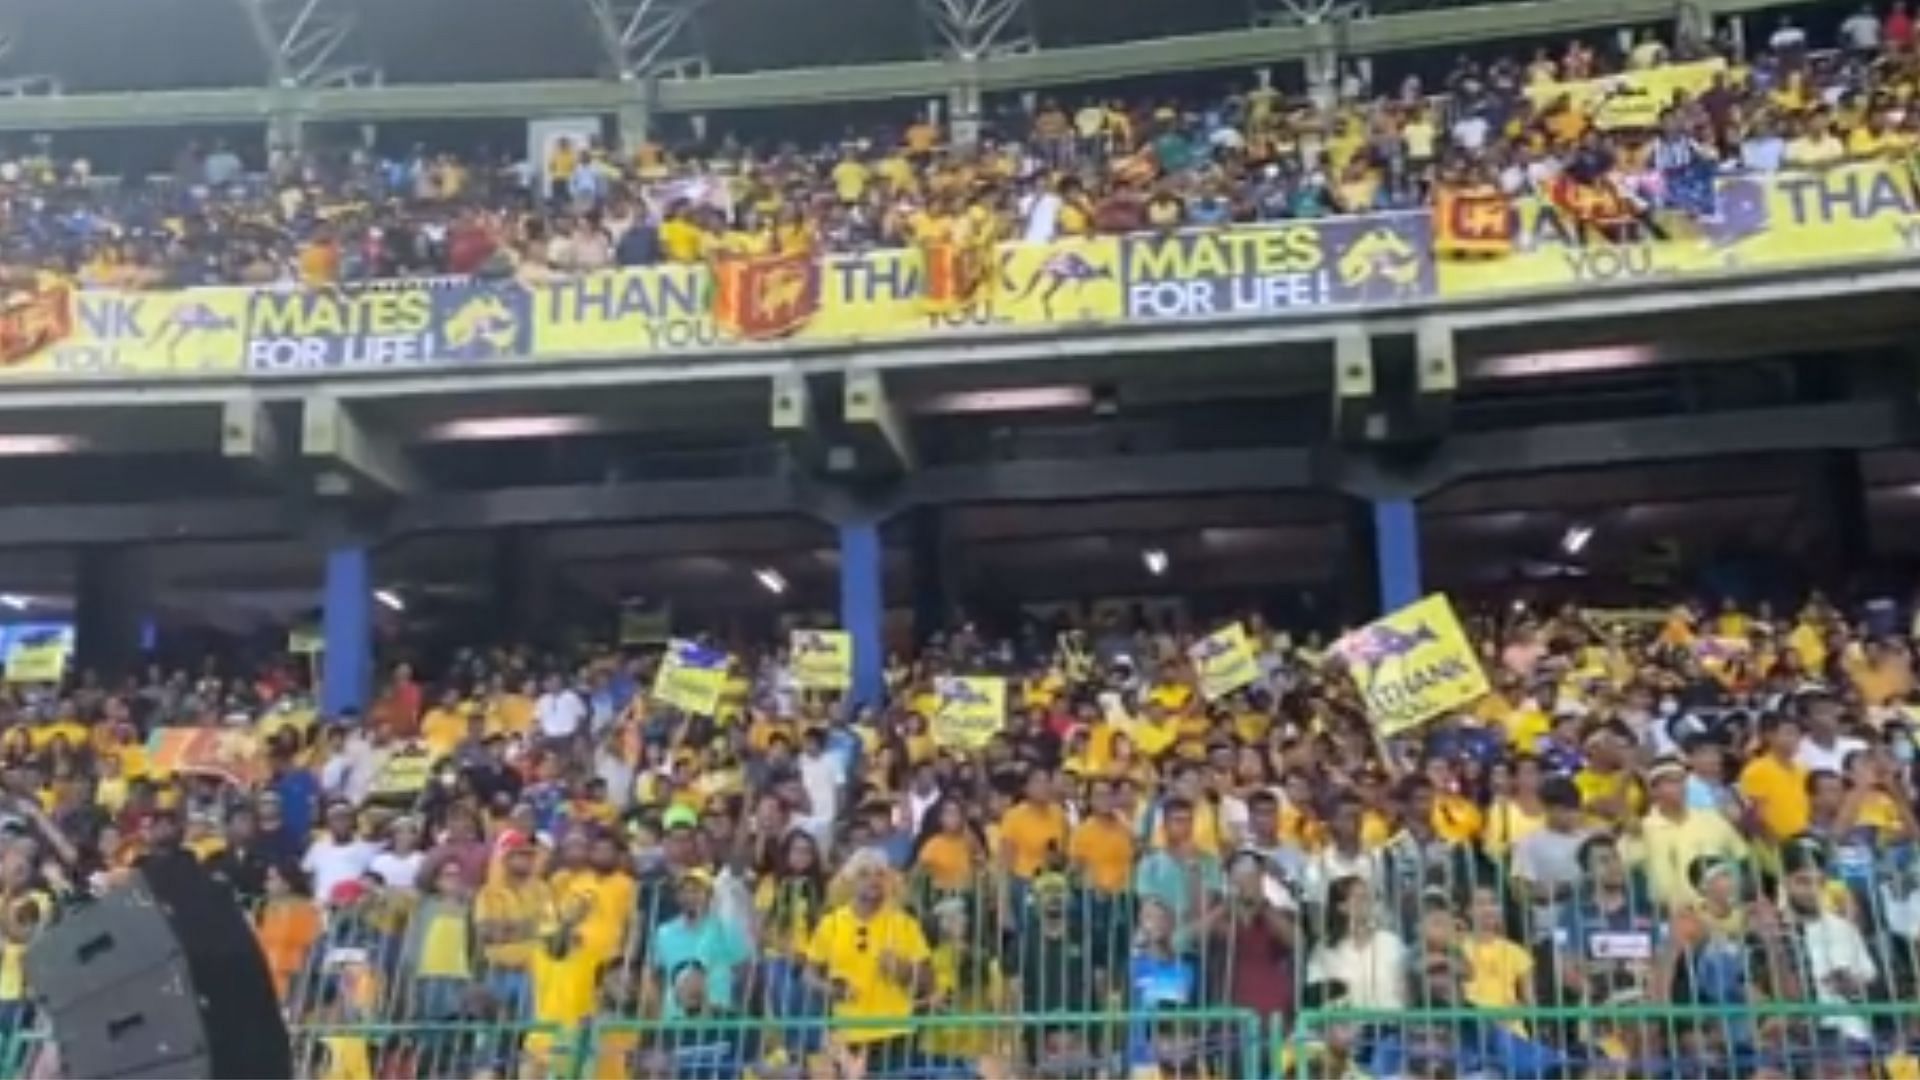 Many Sri Lankan supporters were seen wearing yellow jerseys and waving Australian flag. (P.C.:SLC)